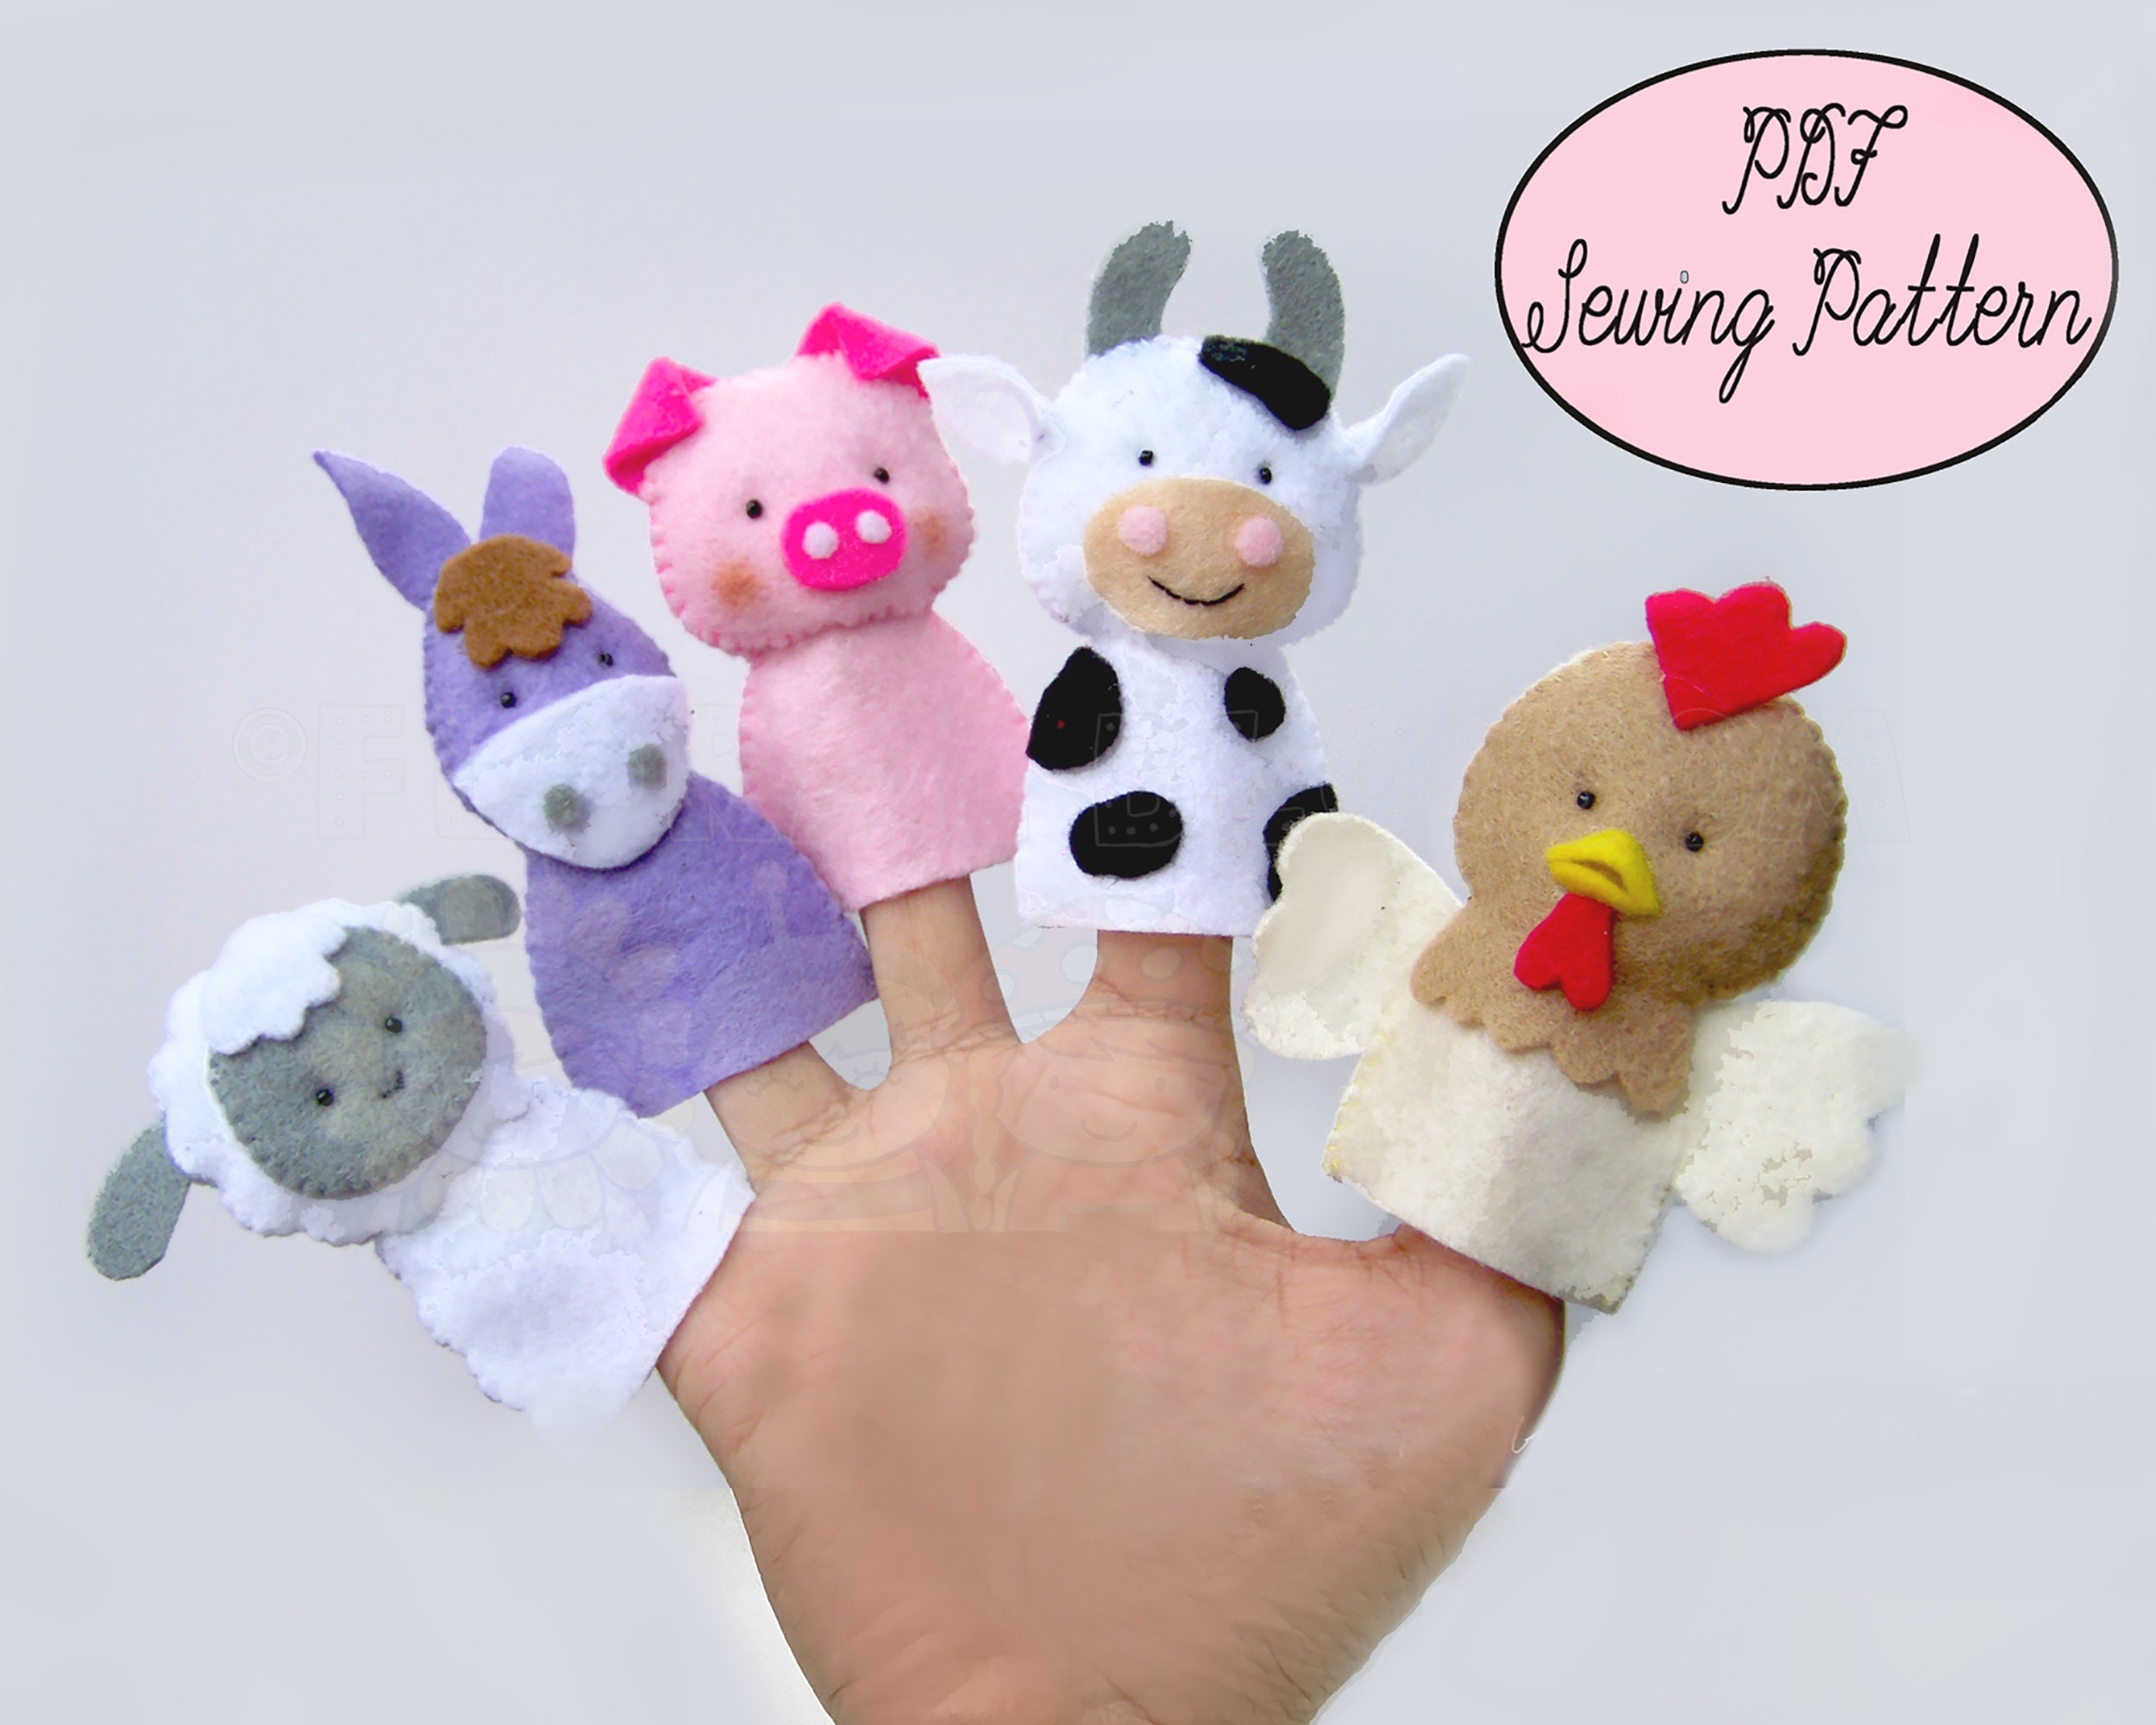 6 Pieces Animal Hand Puppet Making Kit,Felt Glove Puppets Show